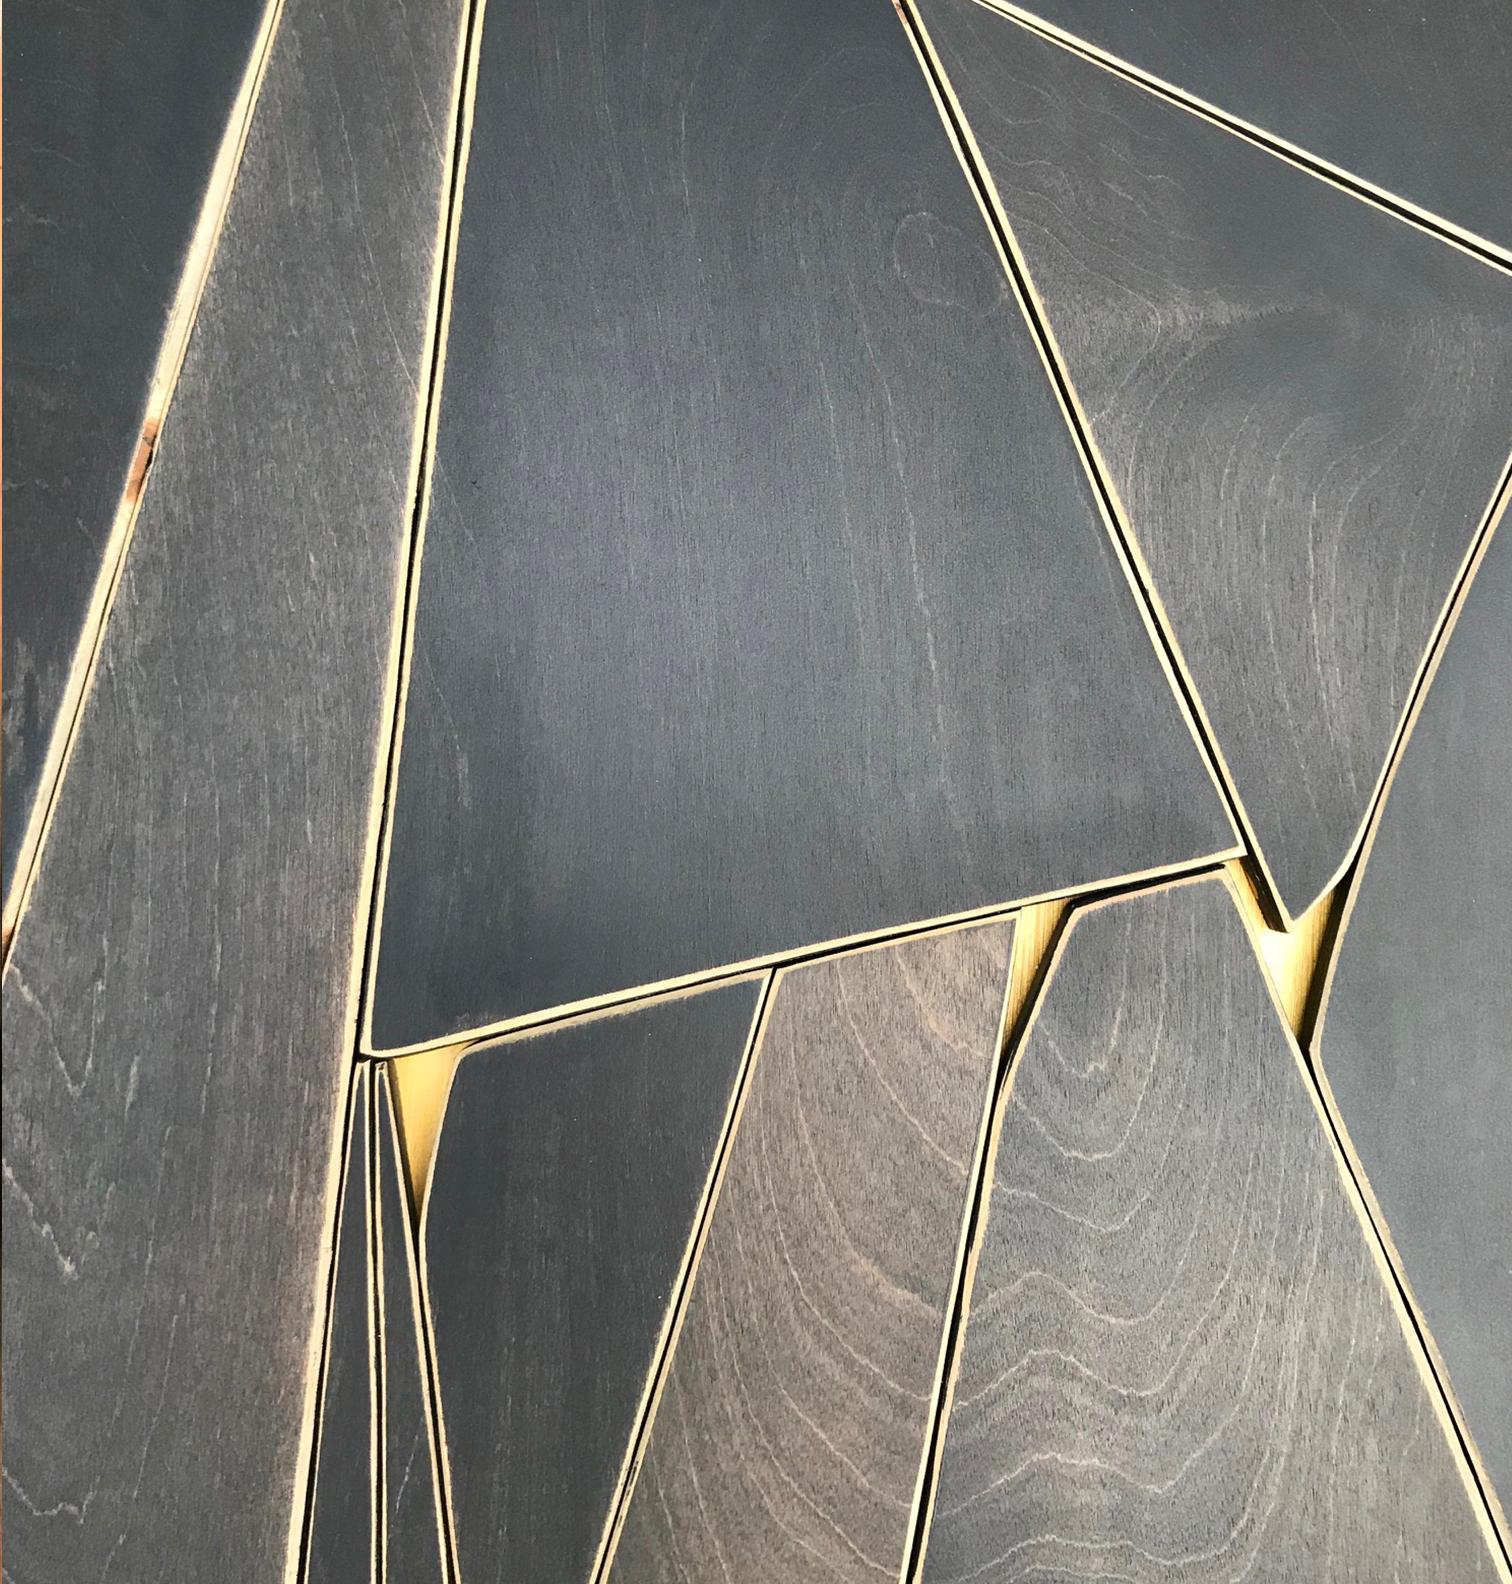 Monochrome Holz-Wandskulptur „Outlier“ – hellbraun, gold, schwarz, elegant, modern (Moderne), Mixed Media Art, von Scott Troxel